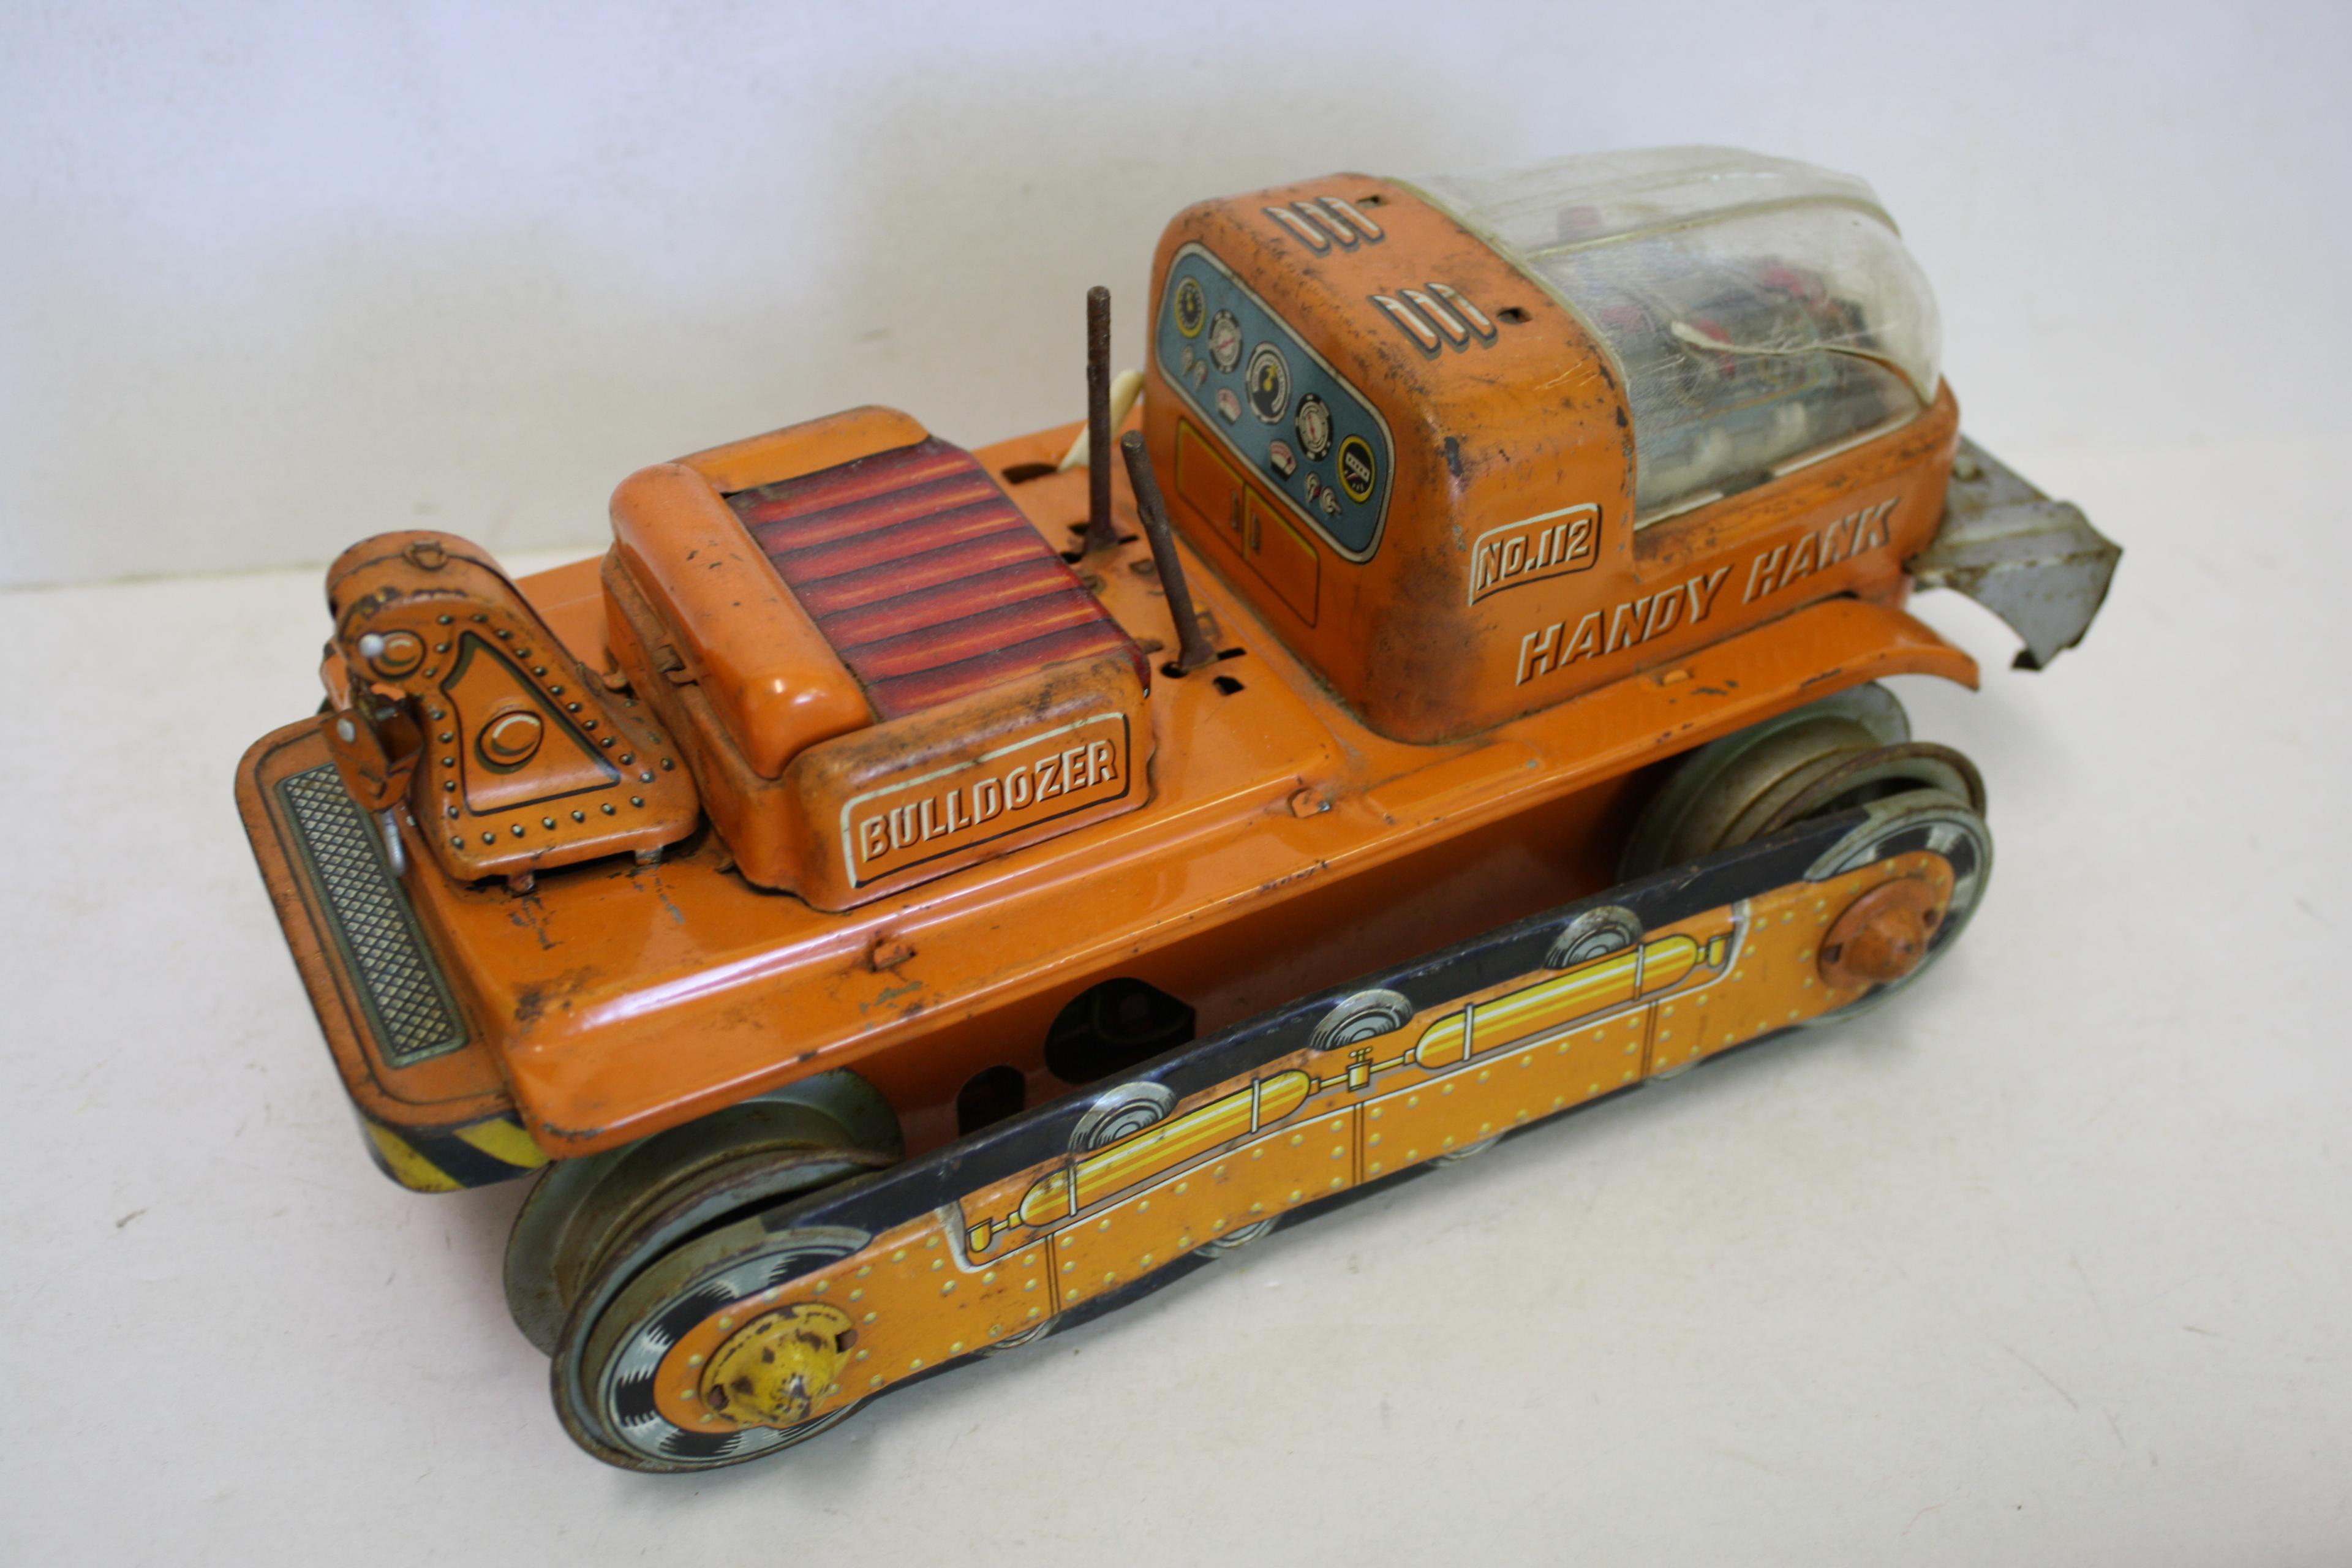 Handy Hank No. 112 Bulldozer Tin Lithographed Toy